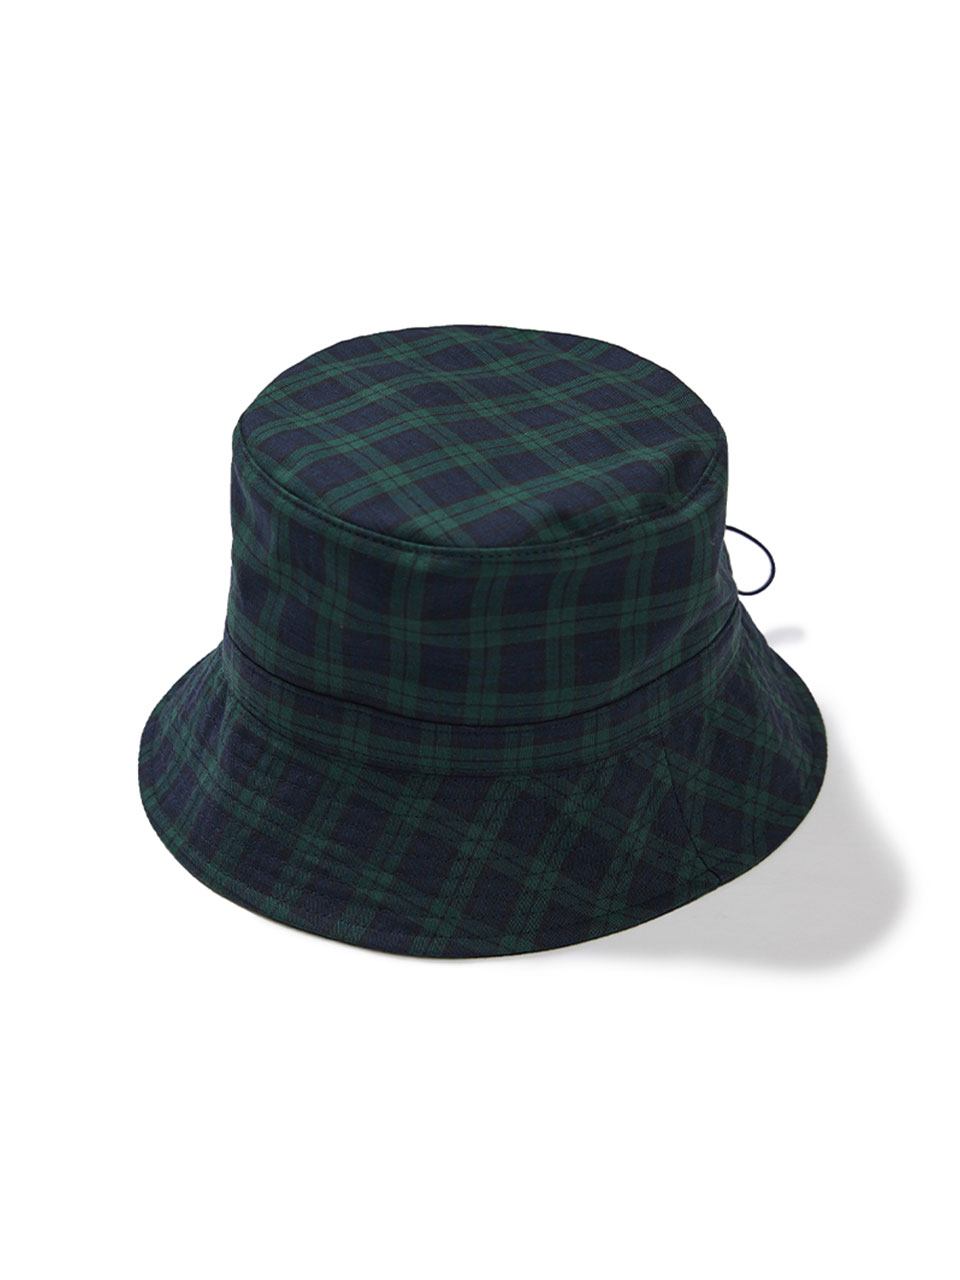 SOUNDSLIFE - Black Watch Bucket Hat Khaki